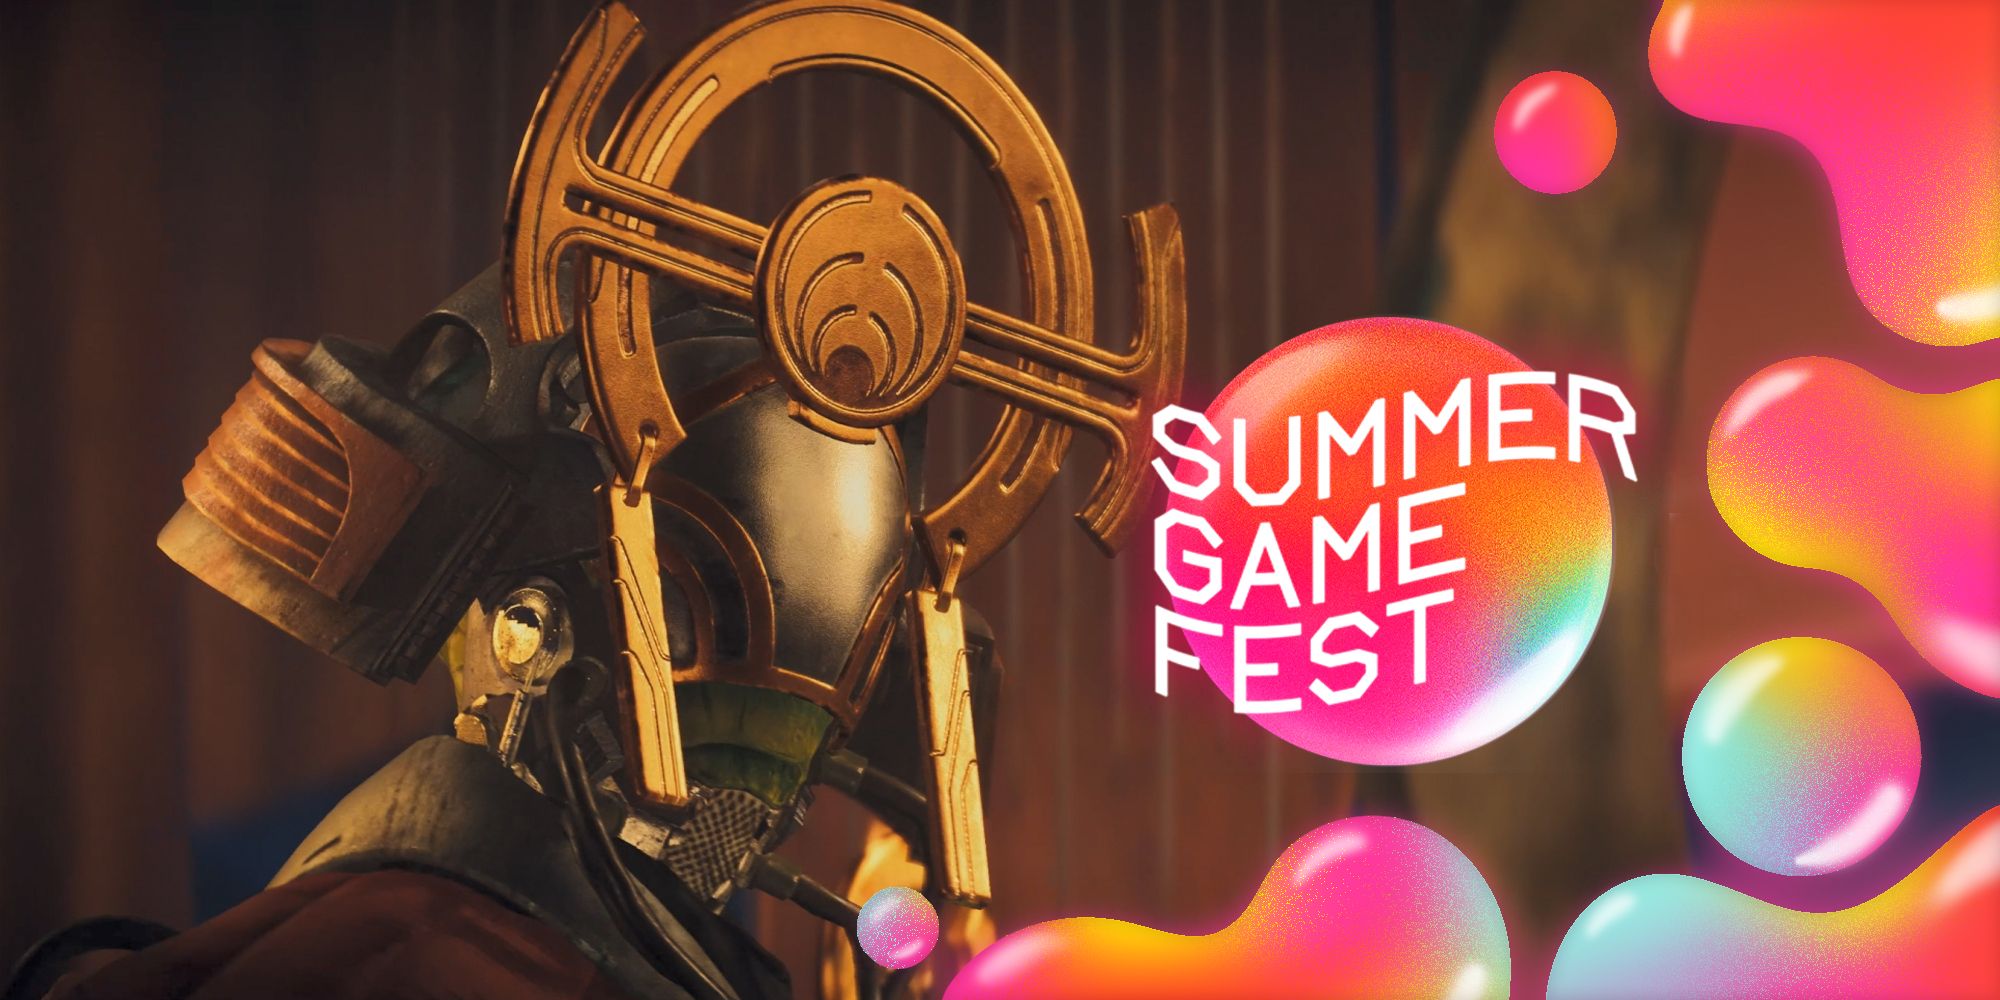 Queen Ashiga with Summer Game Fest logo